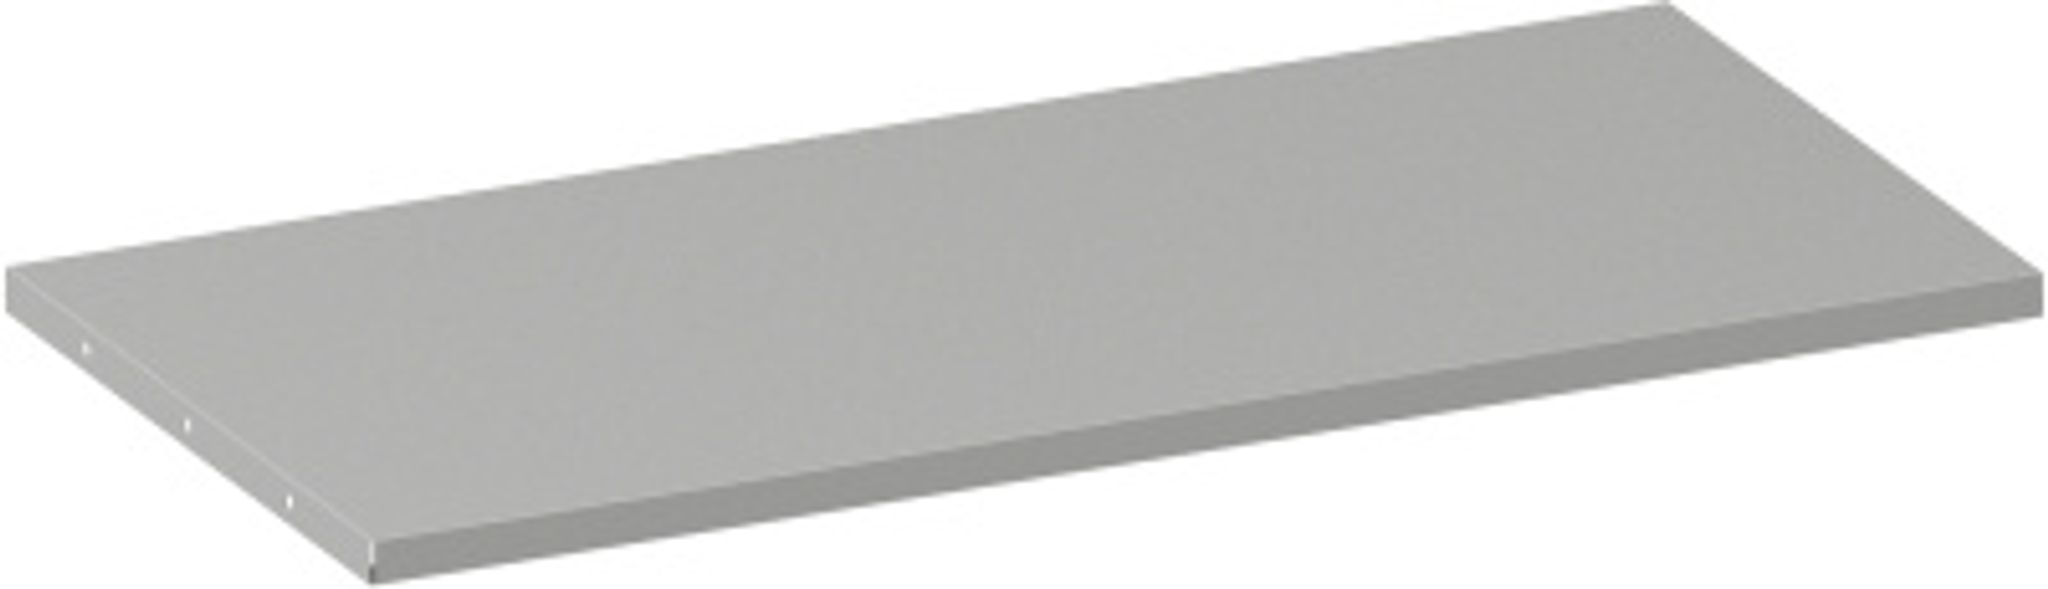 Dodatkowa półka do szafek metalowych, 950 x 500 mm, szara, 1 szt.